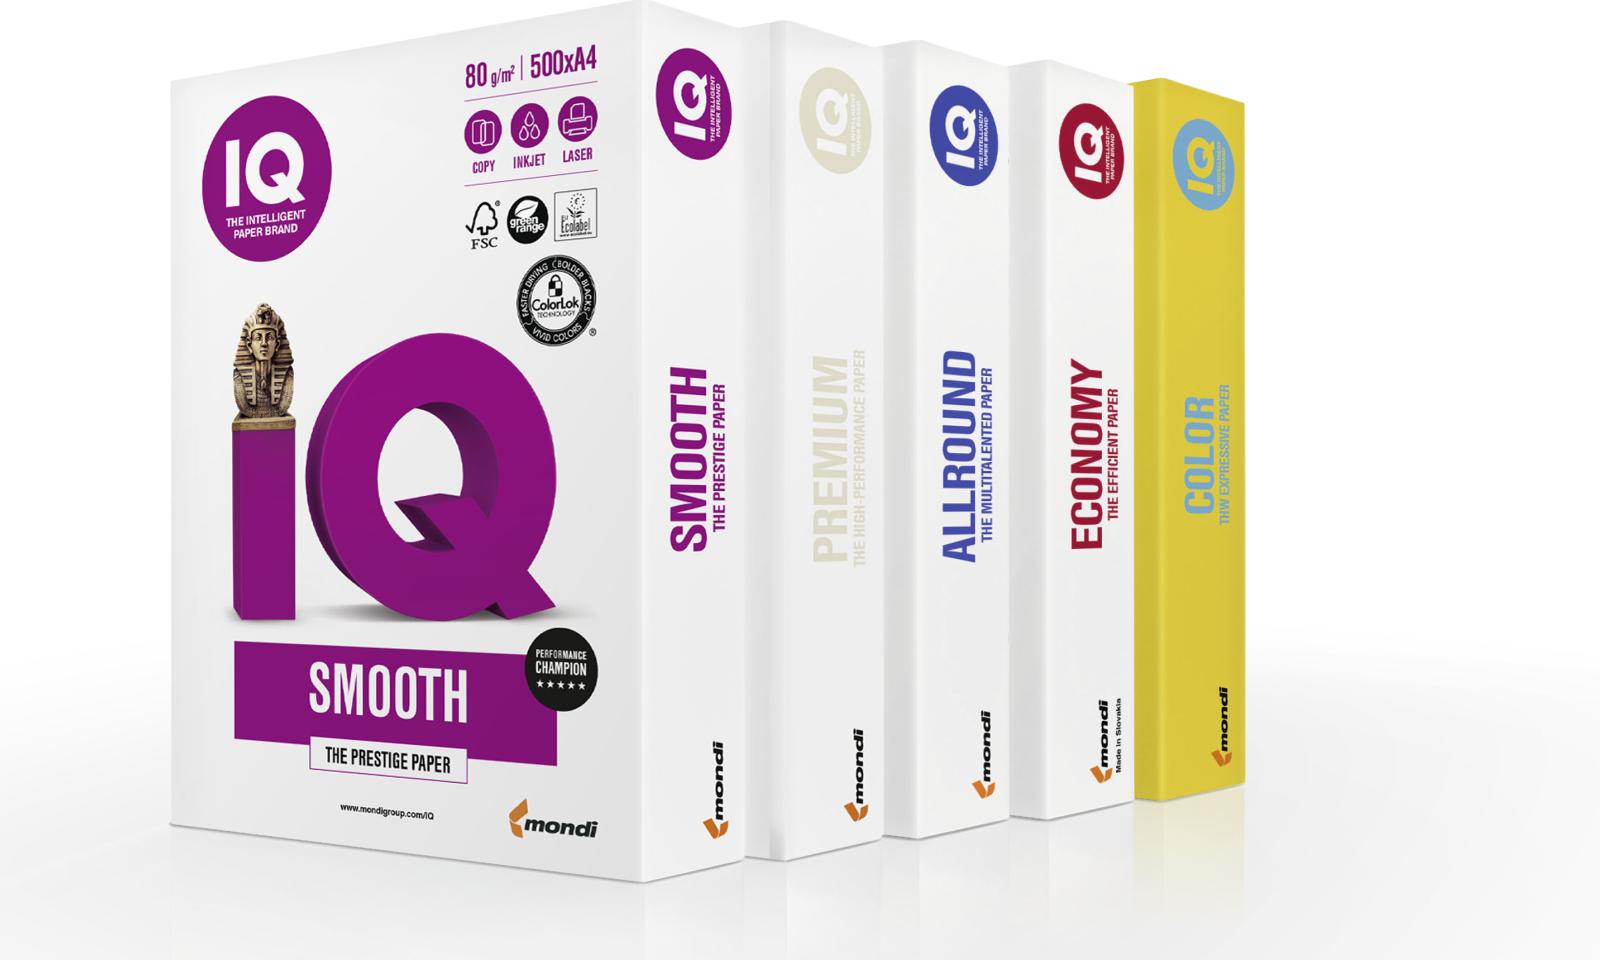 Компания Mondi объявила о редизайне коллекции бумаг IQ